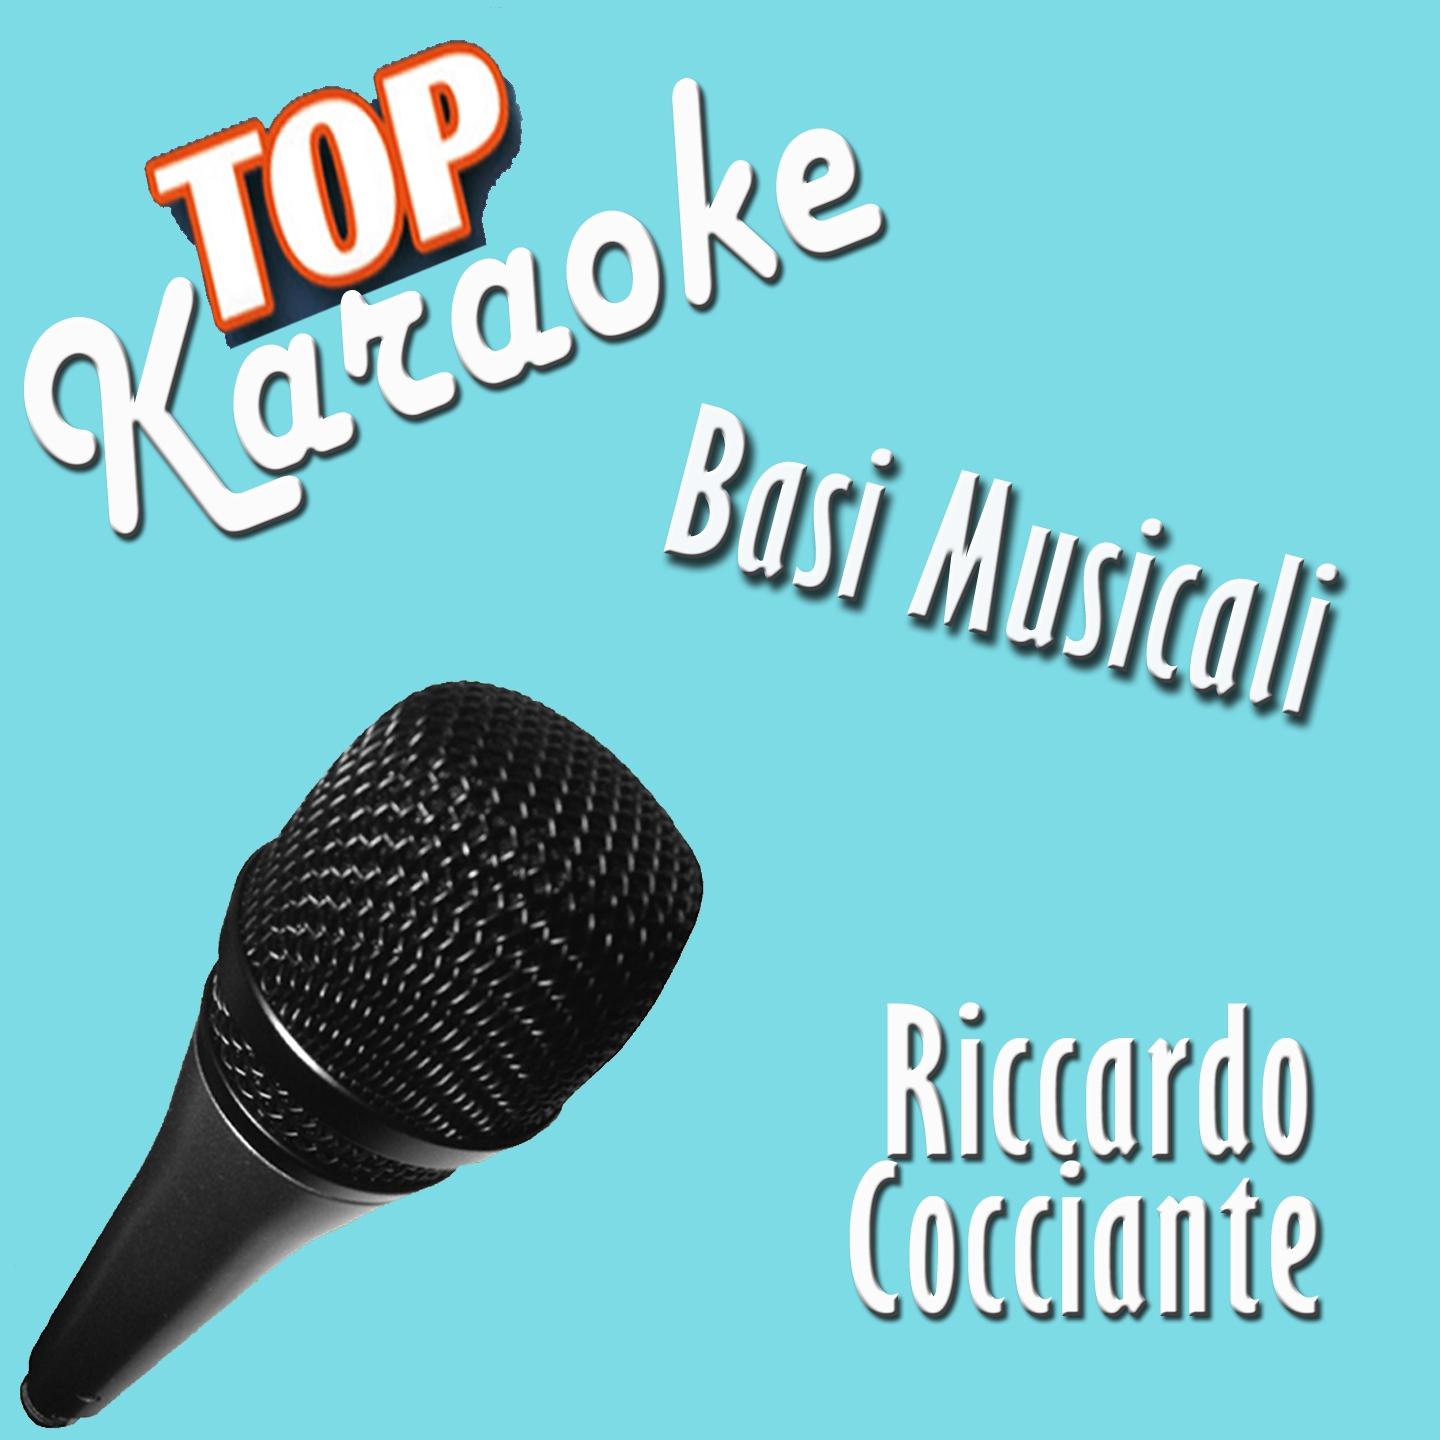 Riccardo Cocciante (Basi musicali)